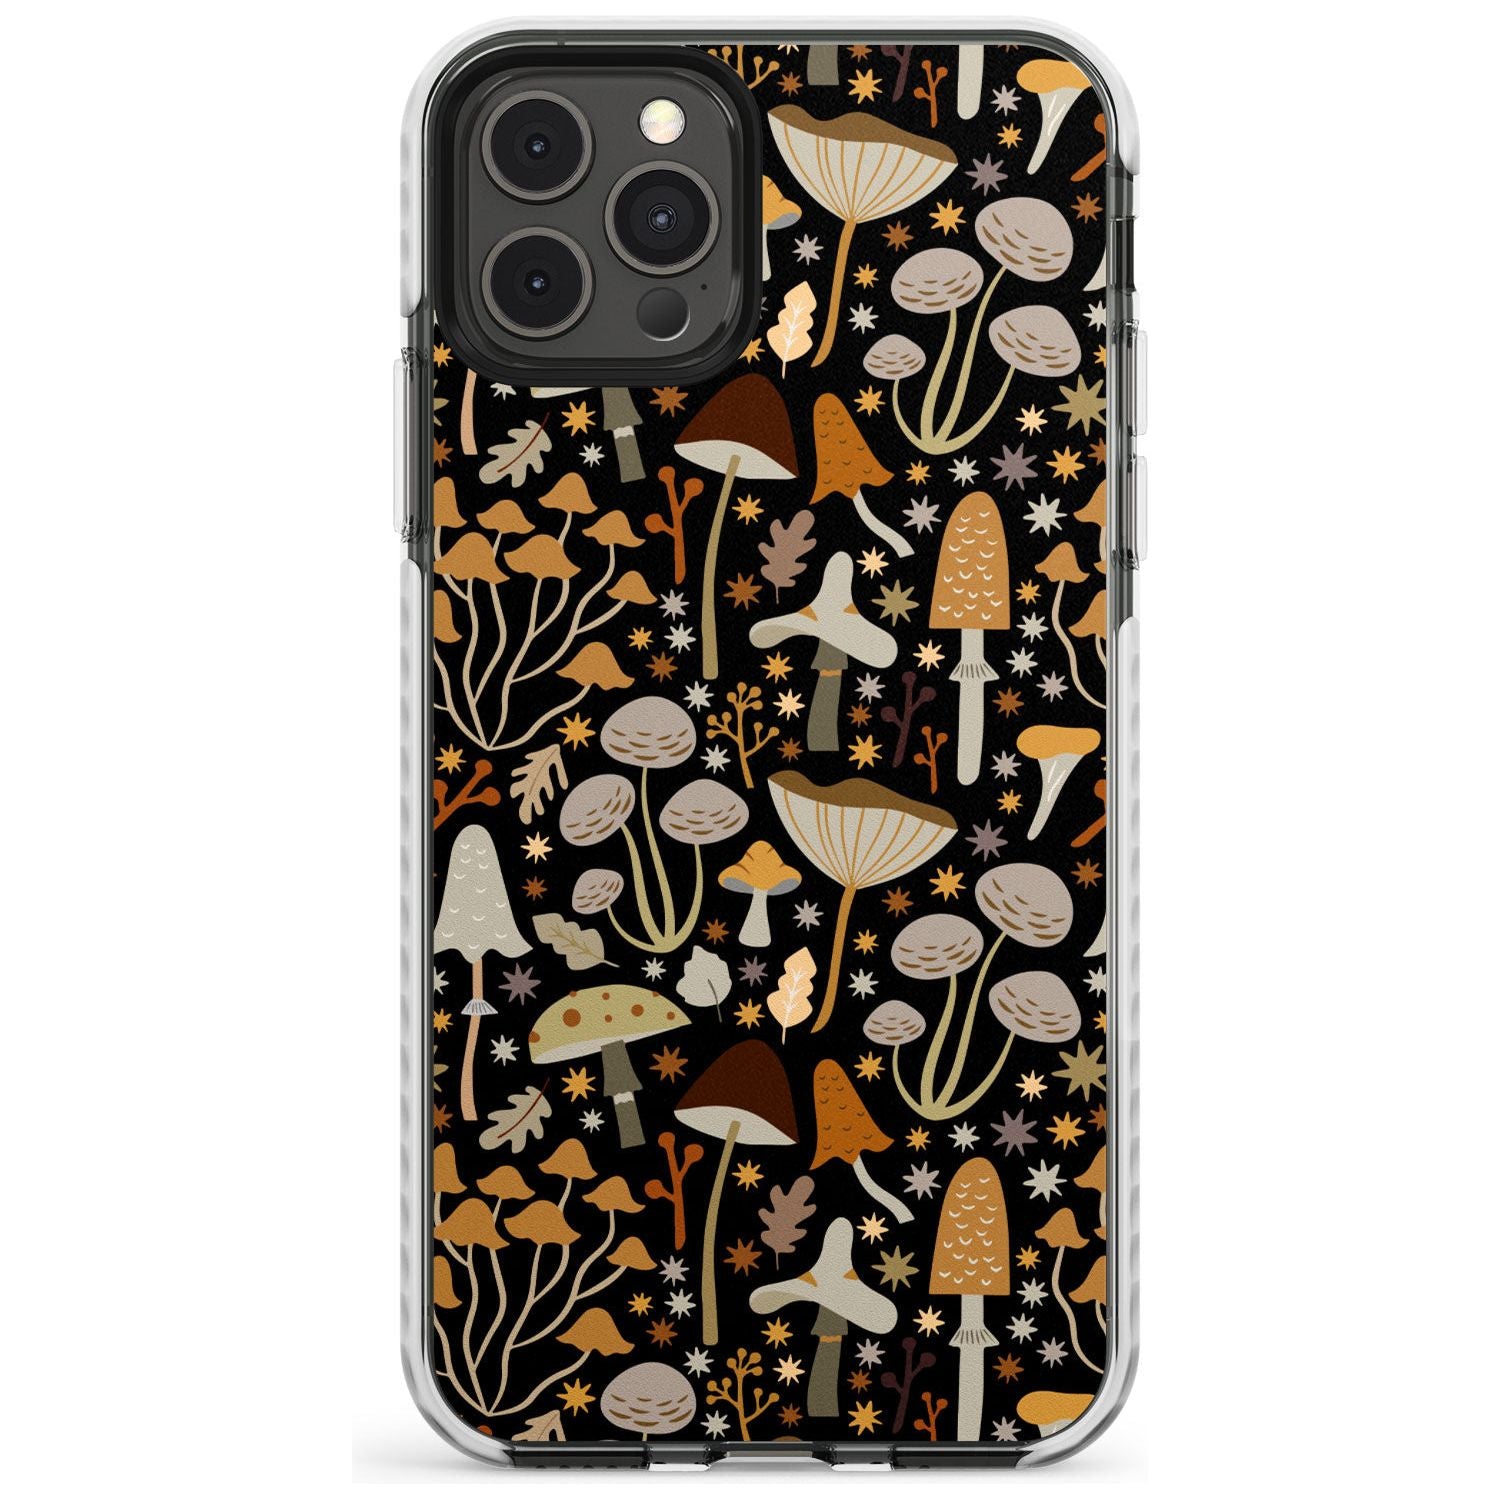 Sentimental Mushrooms Pattern Impact Phone Case for iPhone 11 Pro Max